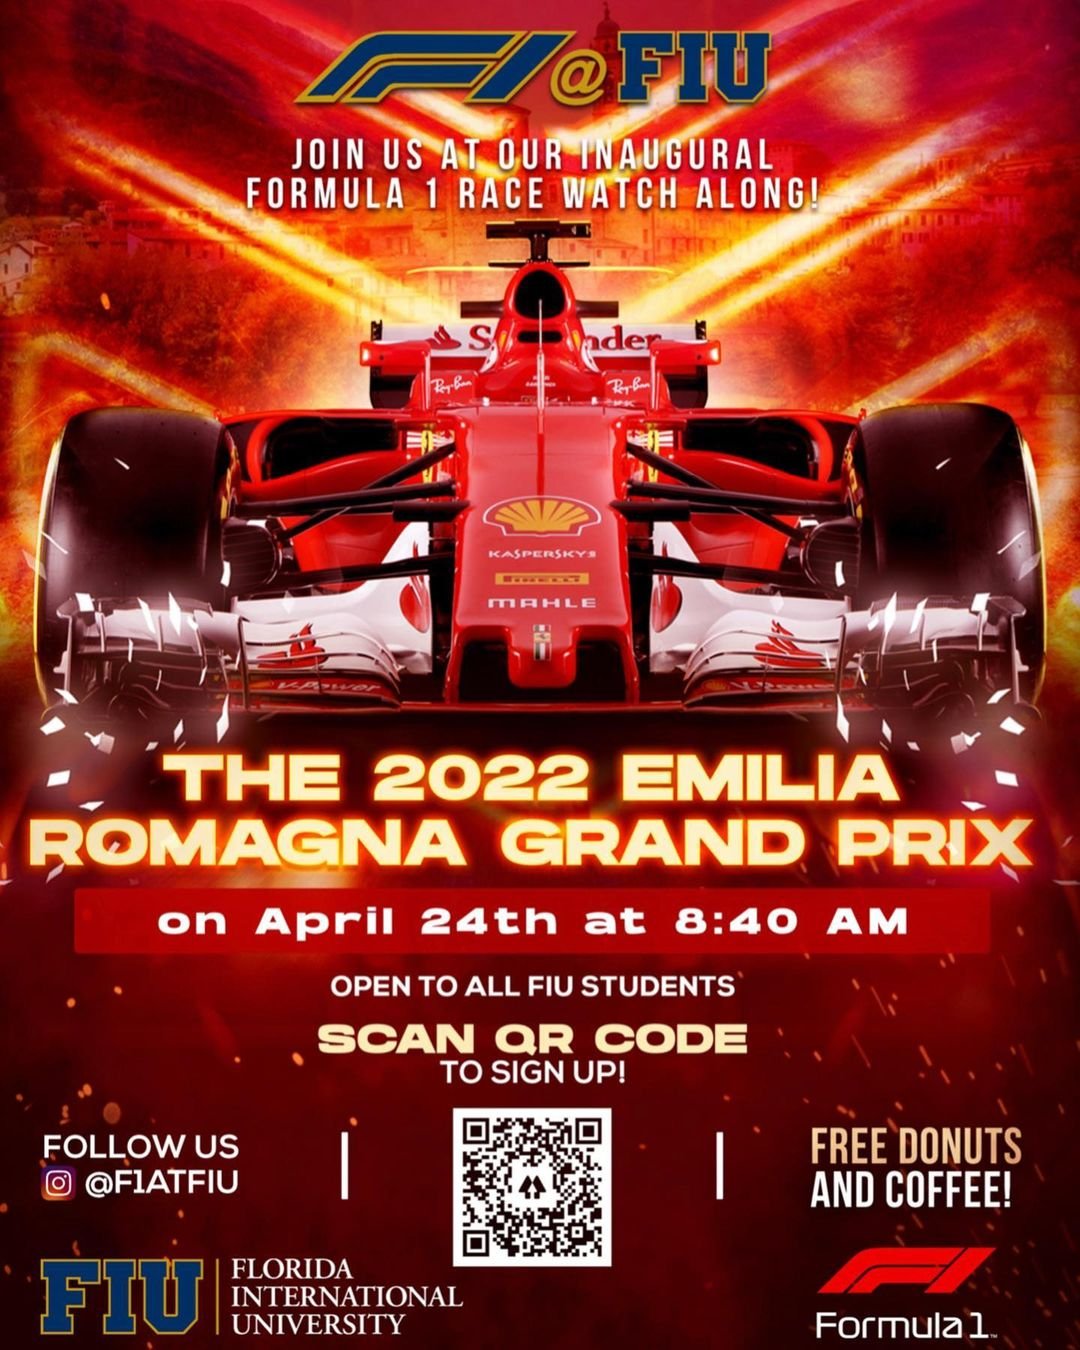 Formula 1 Watch Party withF1atFIU — NXT LVL Gaming